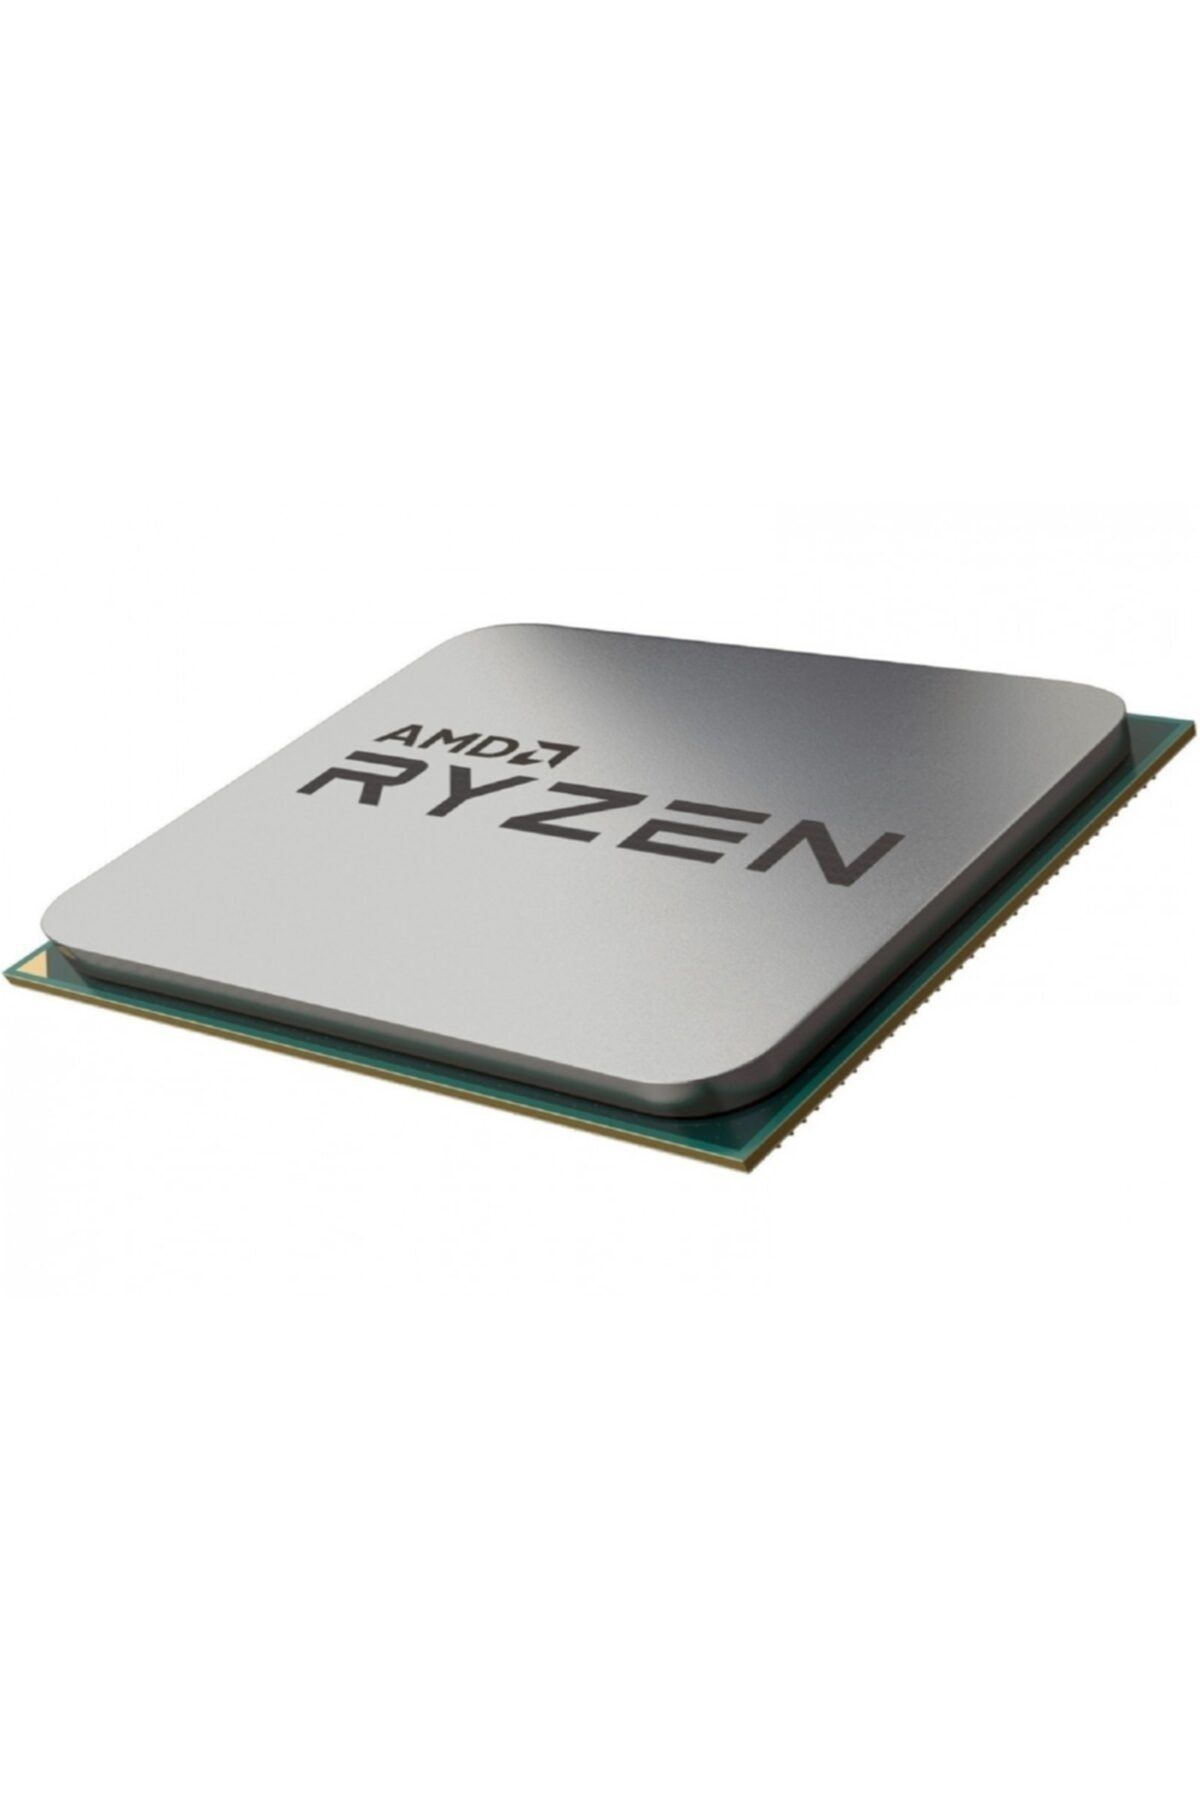 Amd Ryzen 5 Pro 4650g 3,7 Ghz (4,2 Ghz Max.) Socket Am4 100-100000143mpk